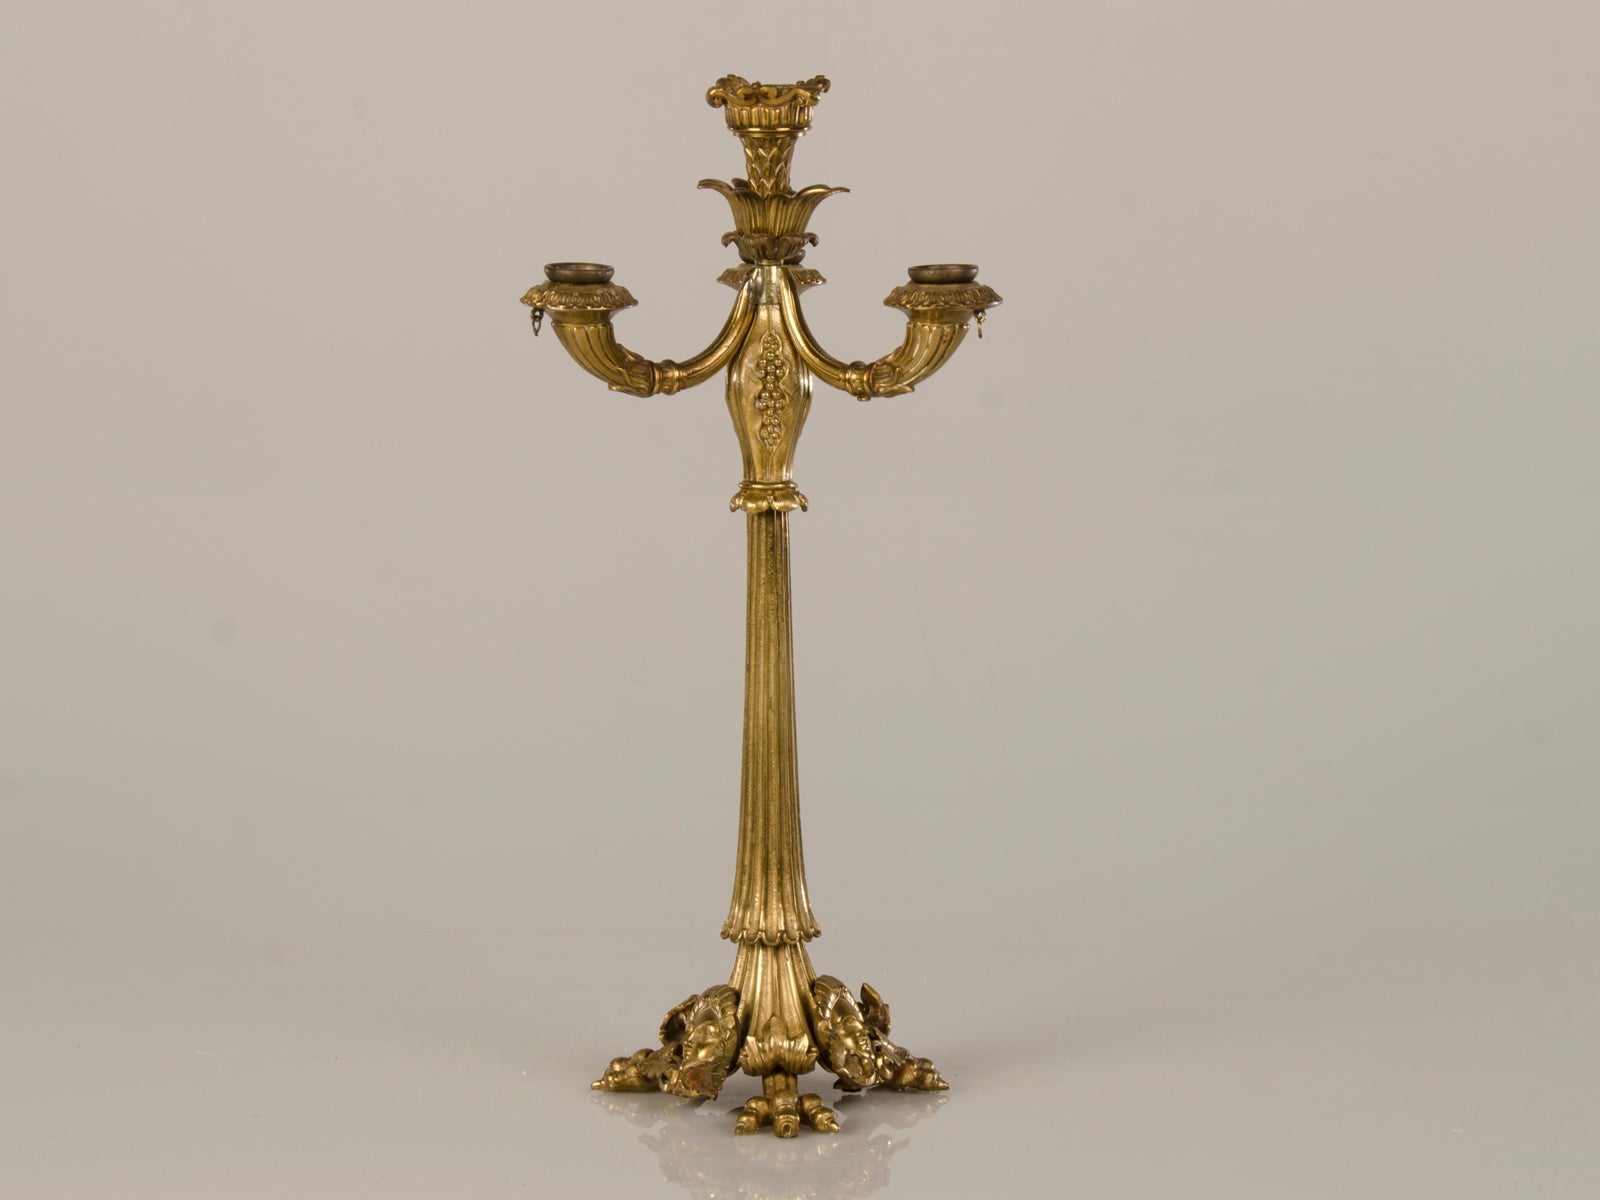 Art Nouveau Period Gilt Bronze Three Arm Candlestick, France c.1890